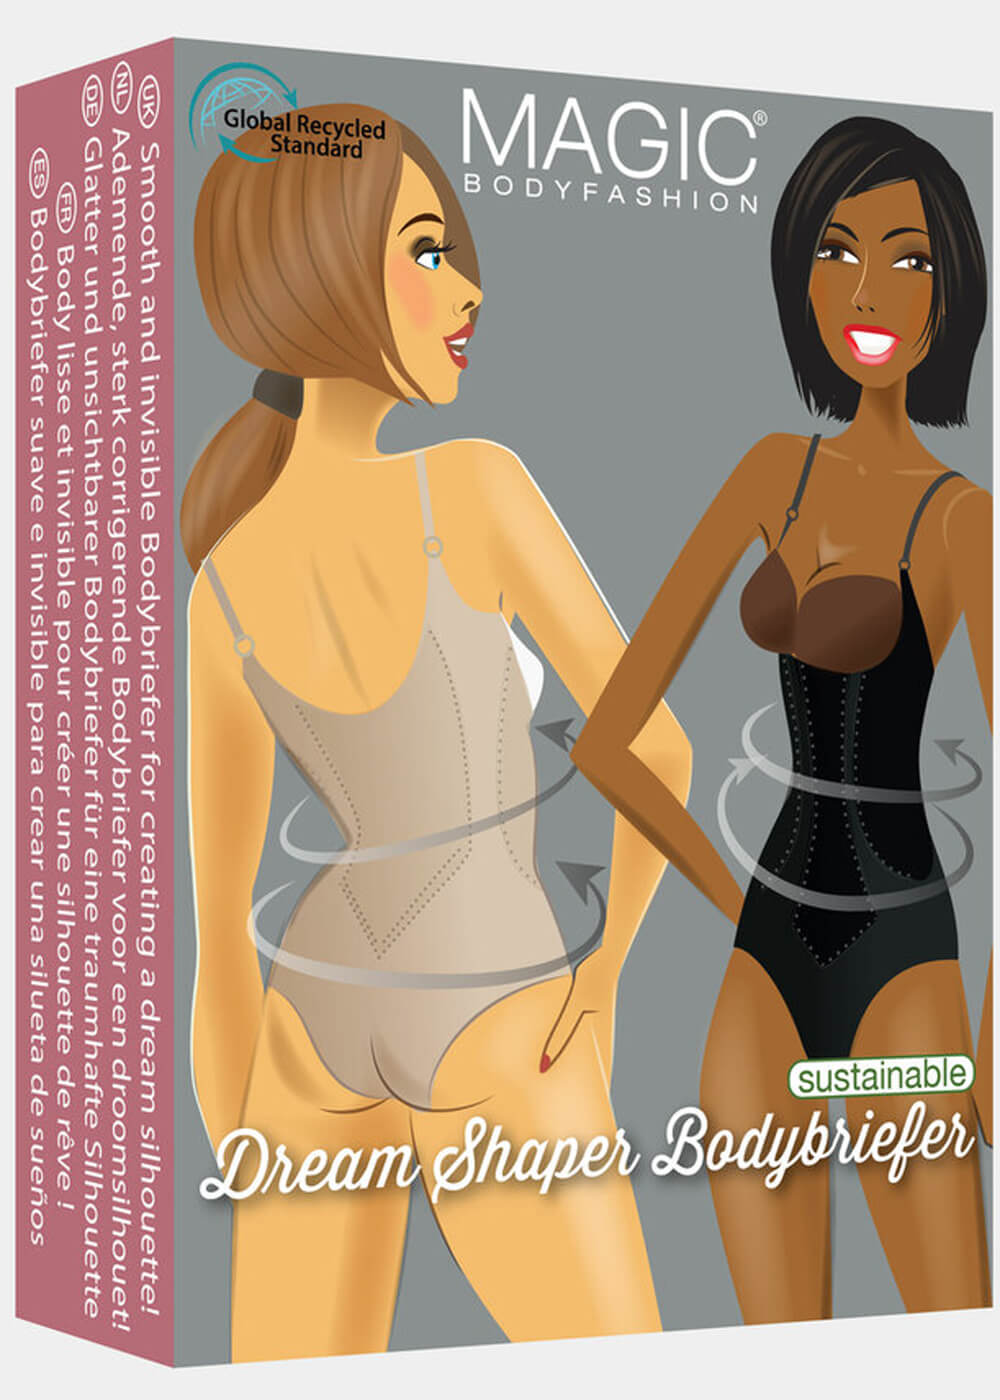 Magic Bodyfashion Dream Shaper Bodybriefer Latte –